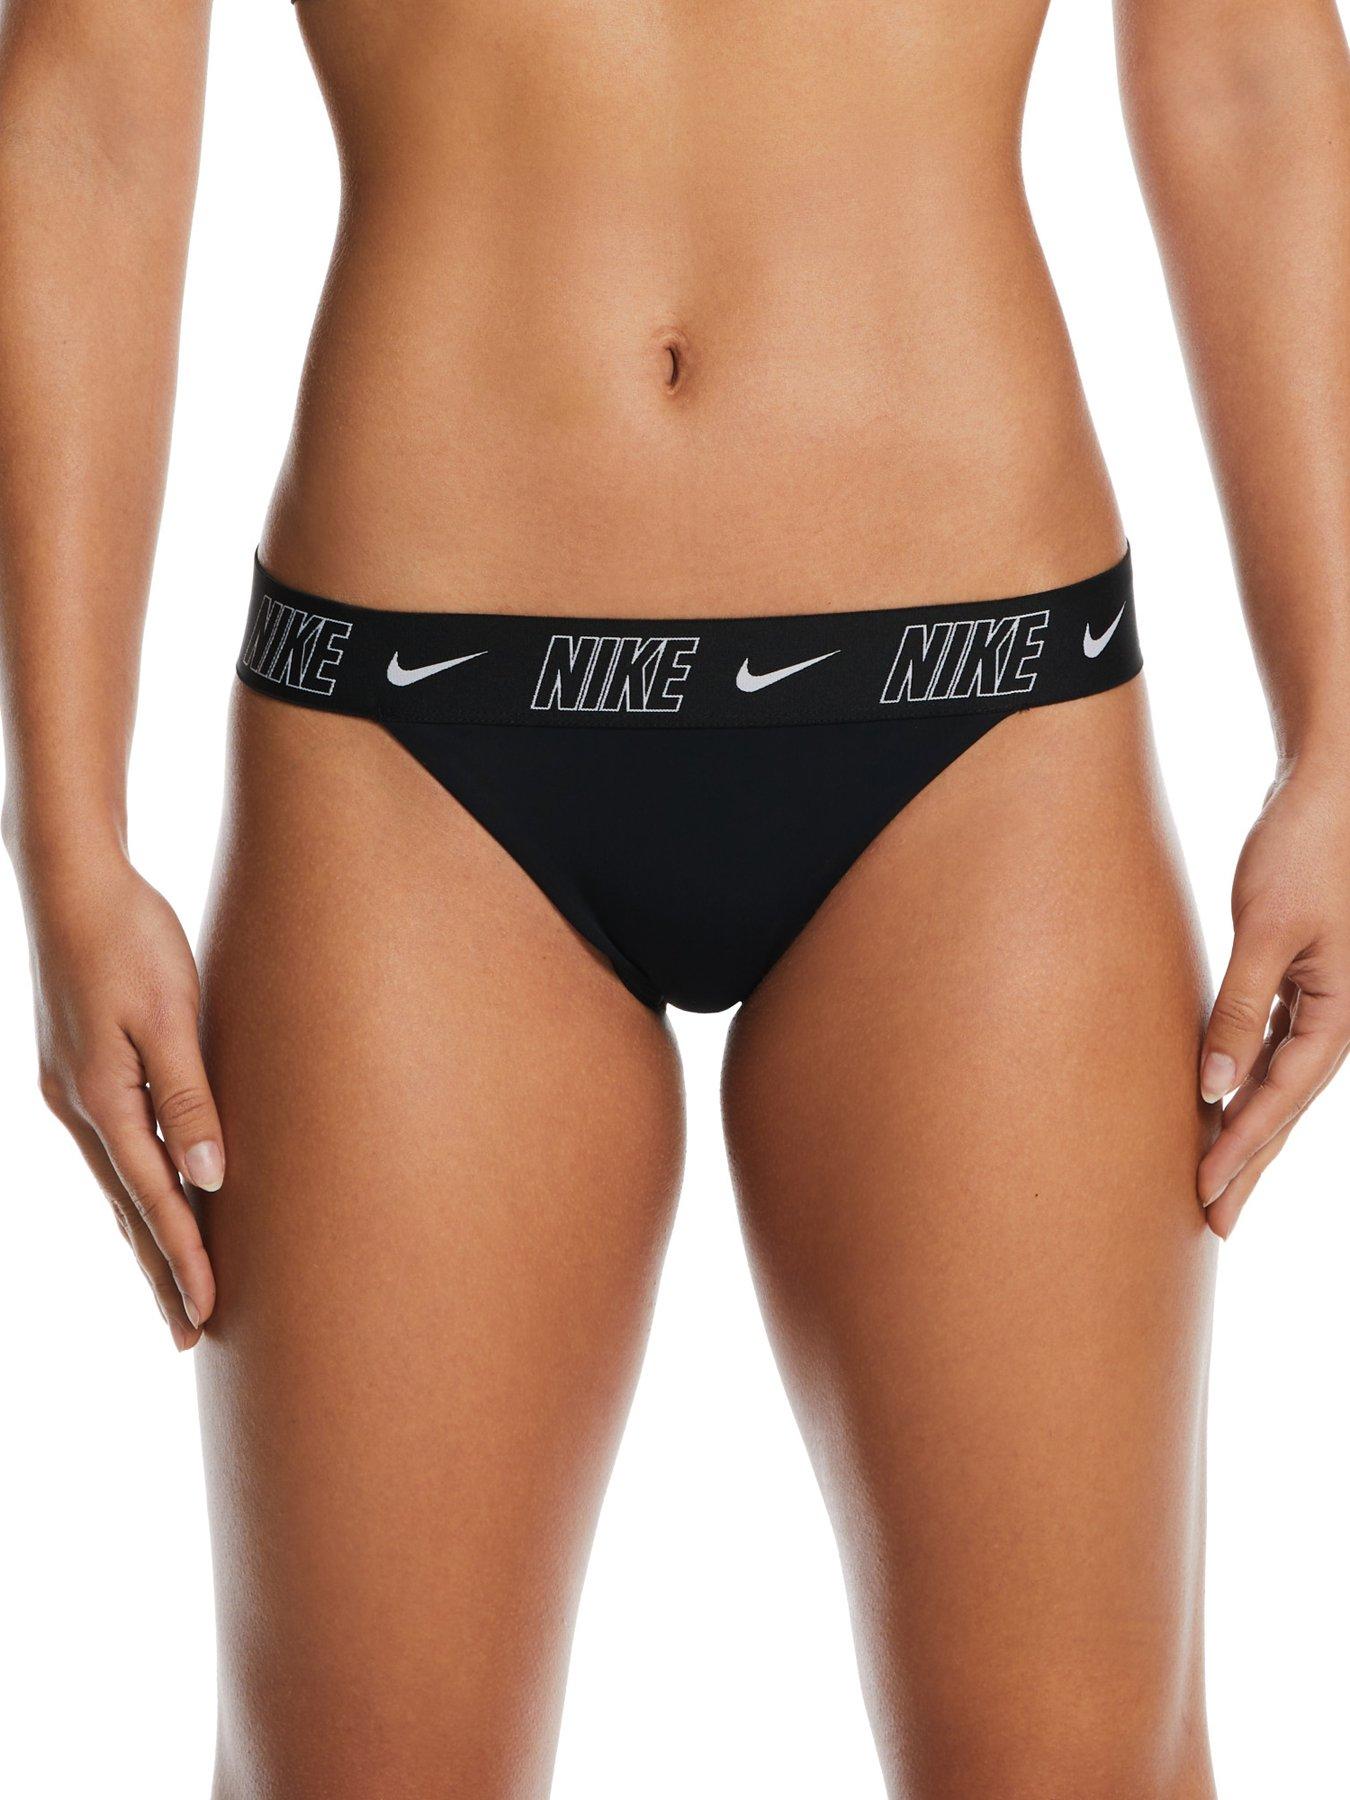 Nike Women's Fusion Logo Tape Fitness Banded Bottom-Black, Black, Size Xs, Women